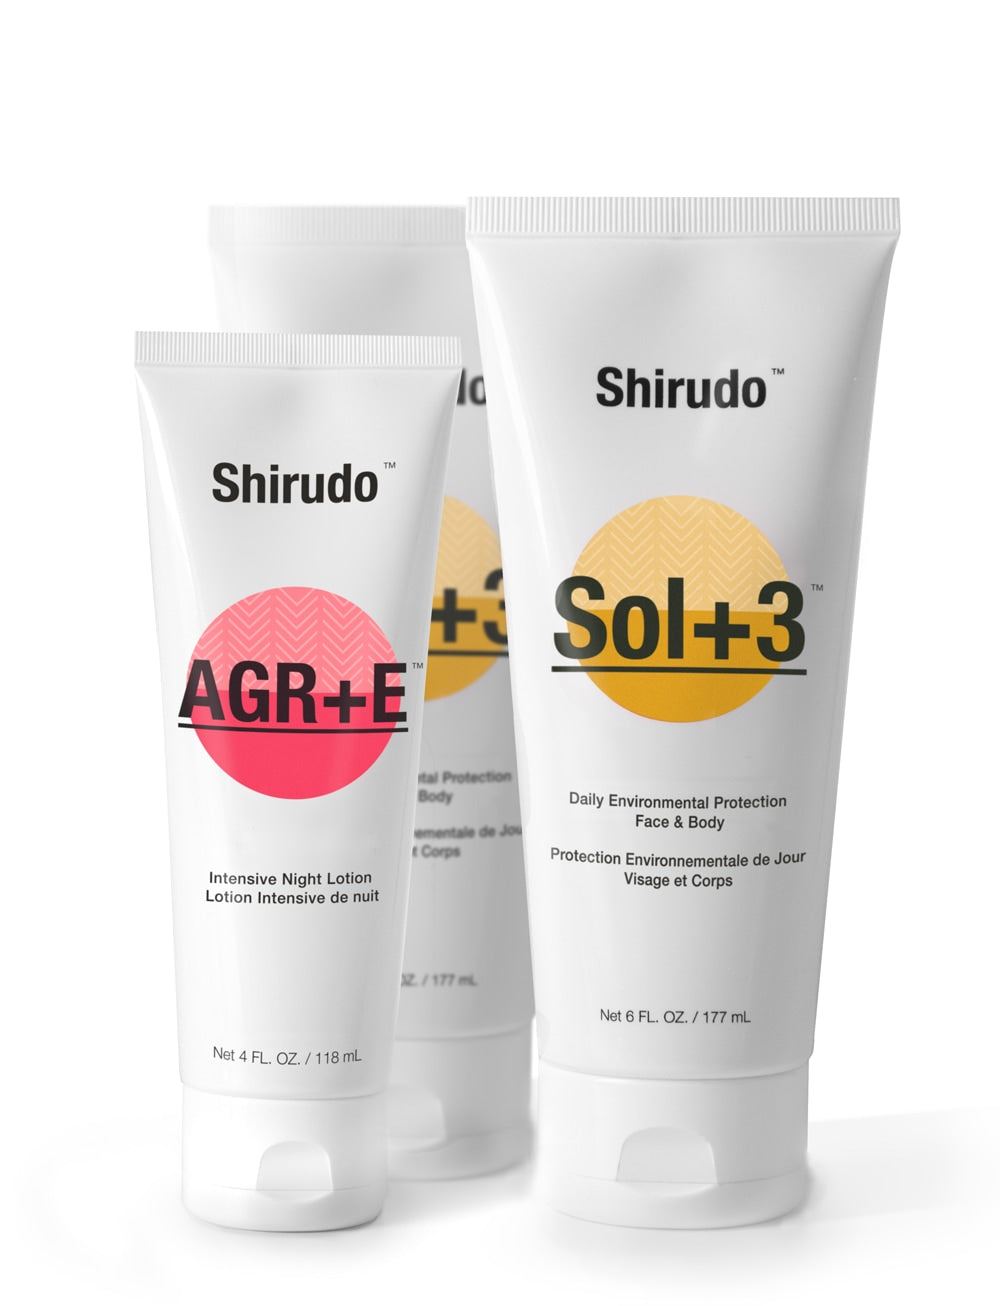 Shirudo Sol+3 and AGR+E Day & Night Set for PMLE